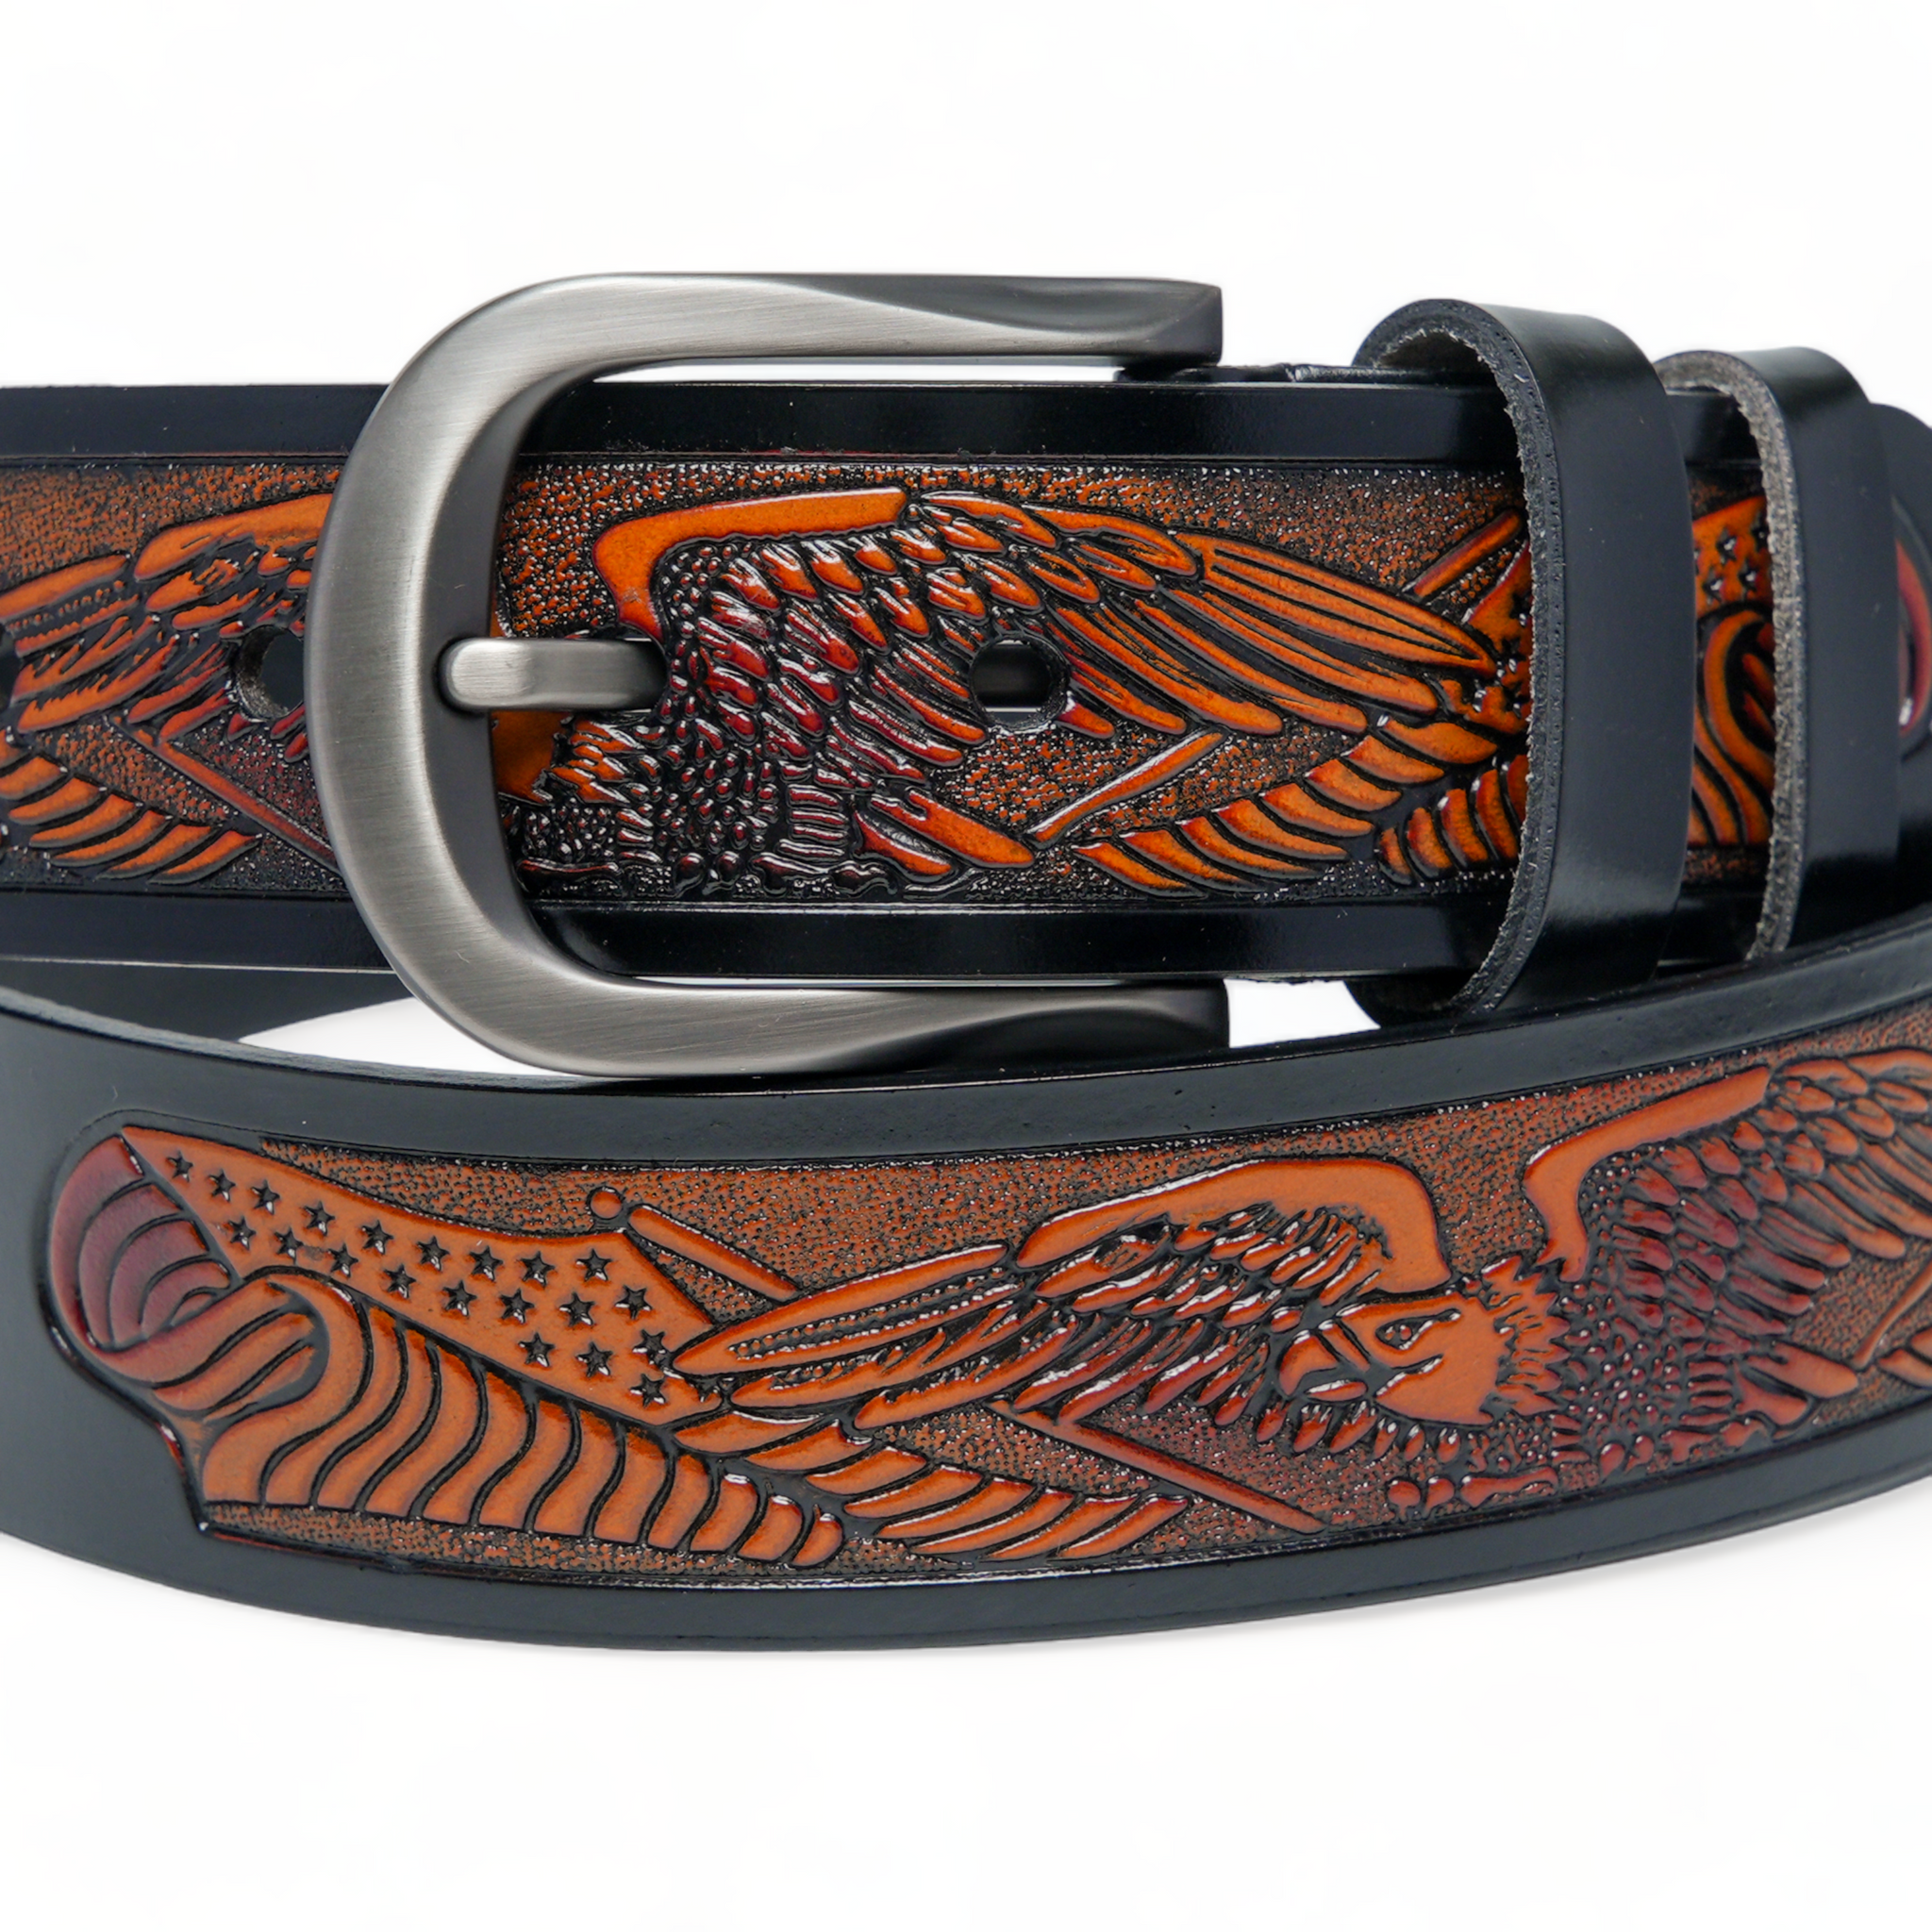 Chokore Eagle Engraved Pure Leather Belt (Black)